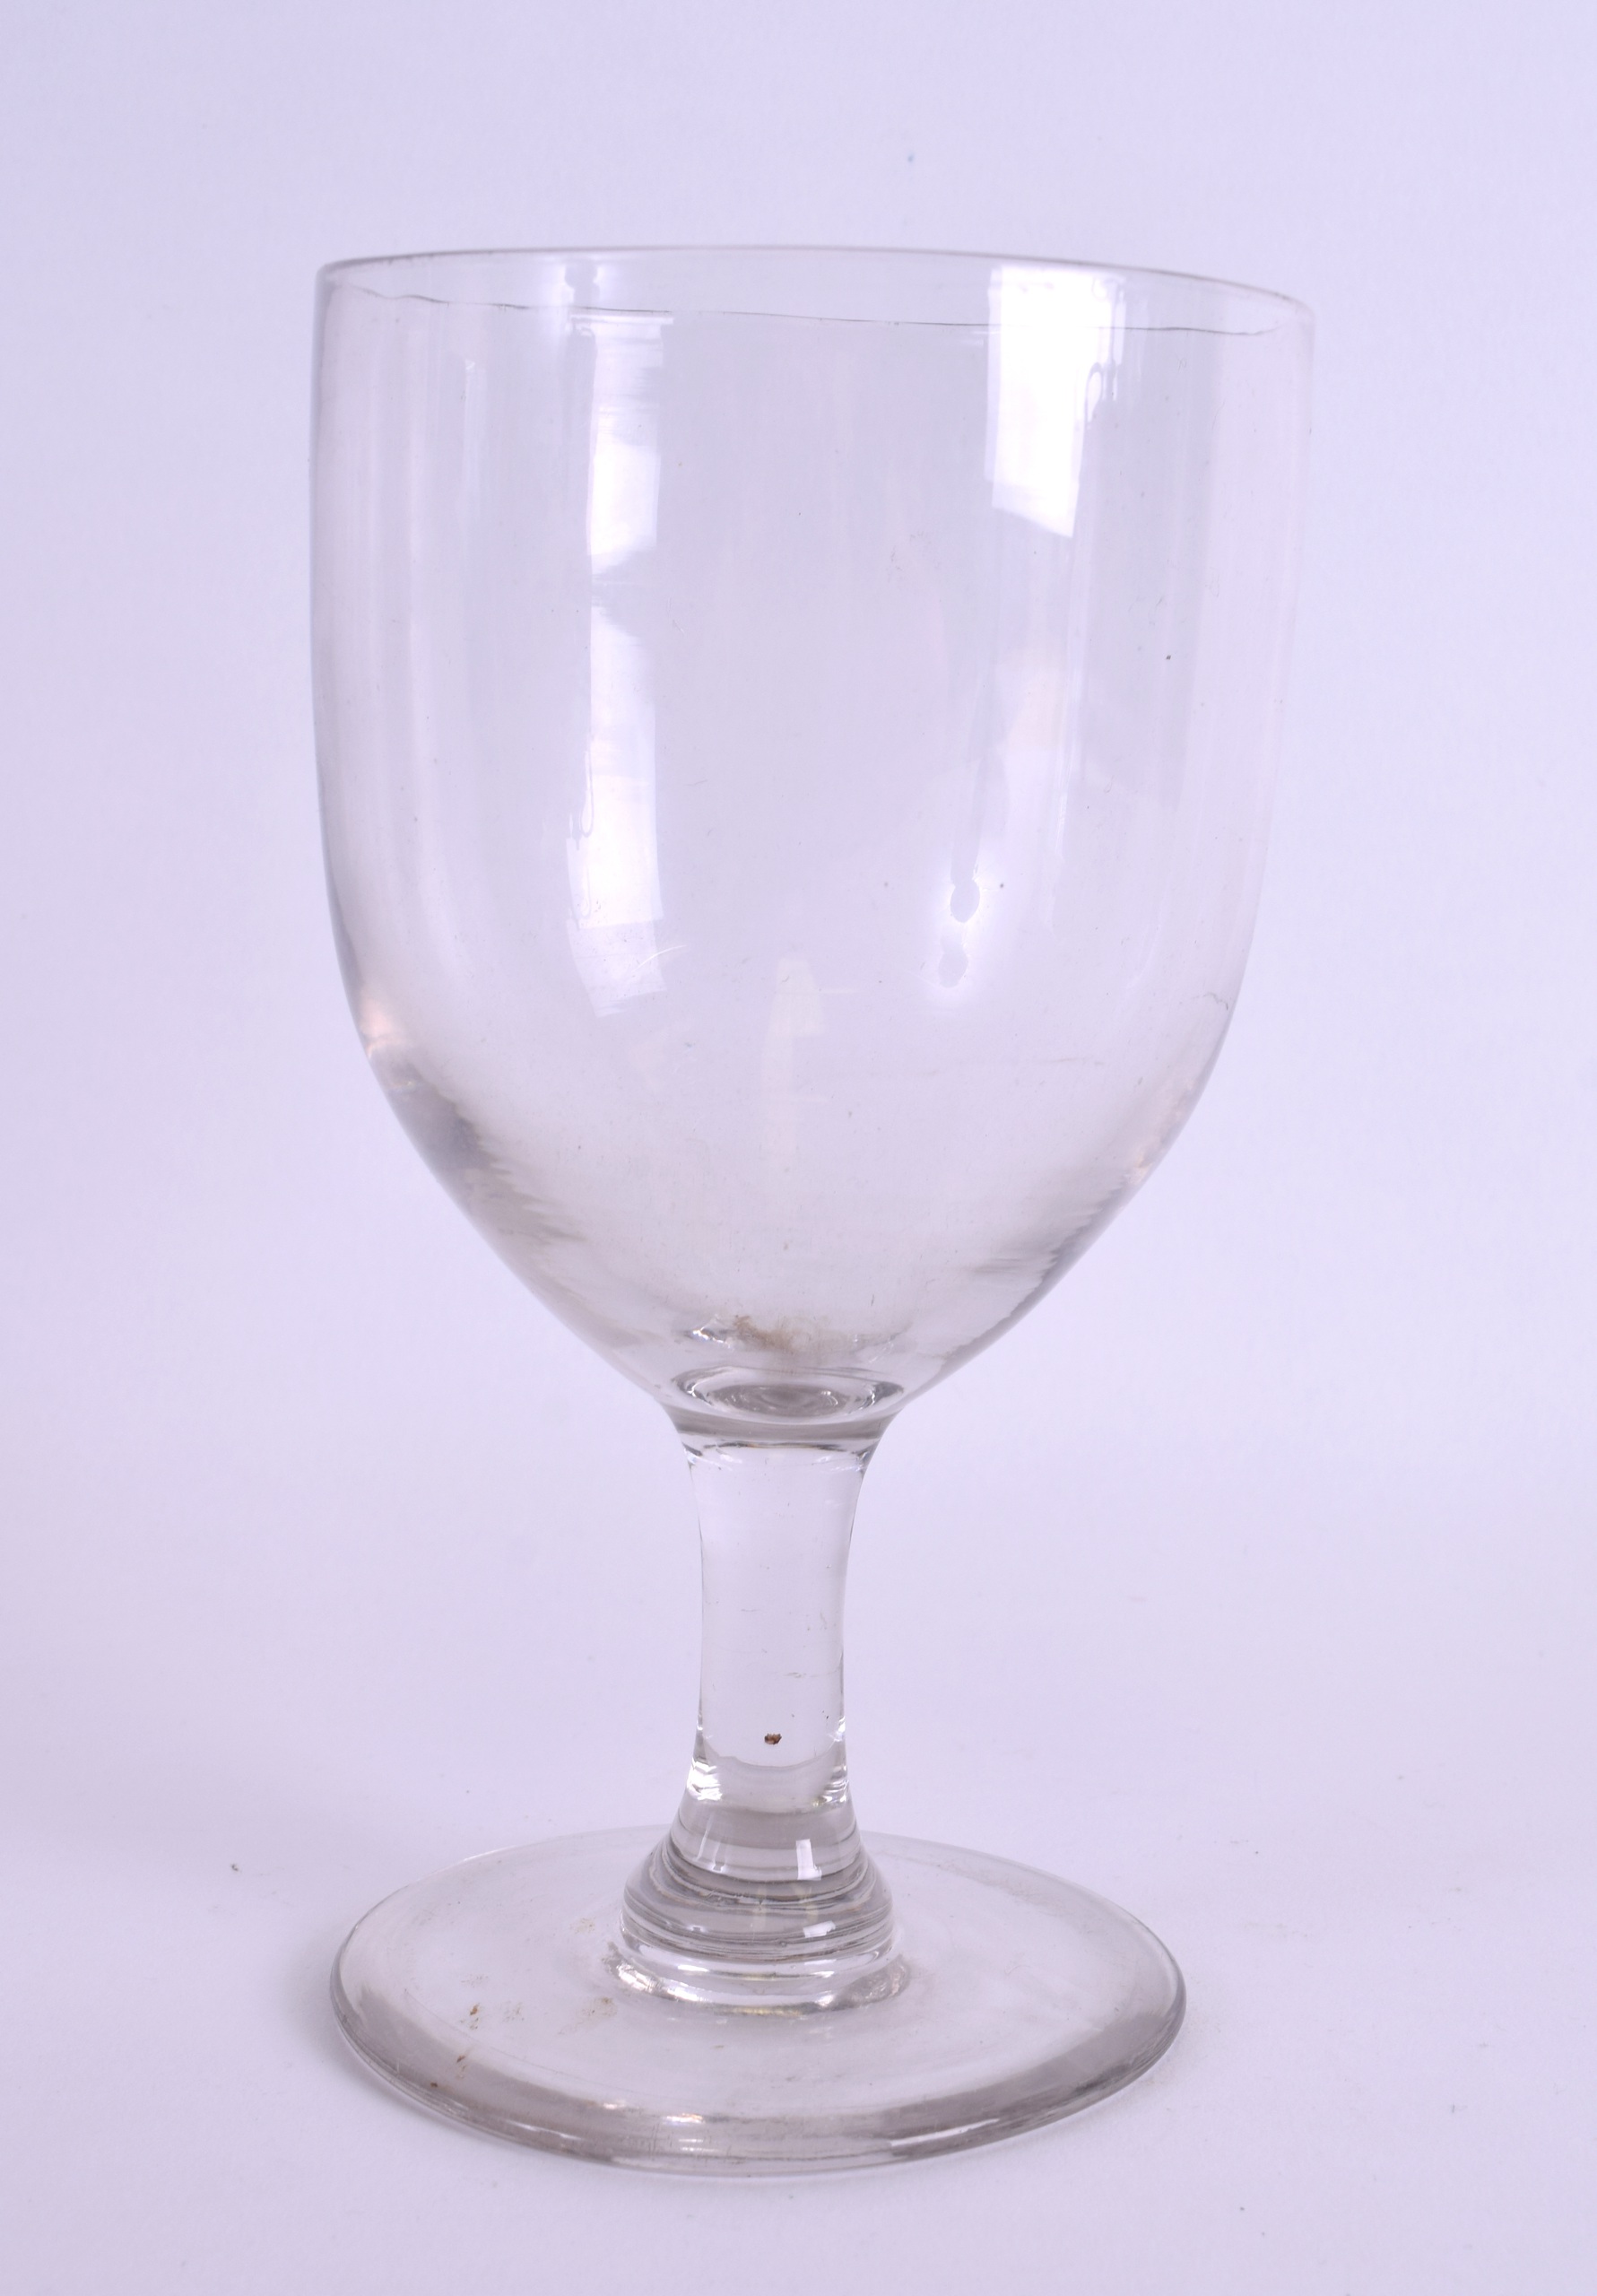 A GEORGE III GLASS. 17 cm high. - Image 2 of 2